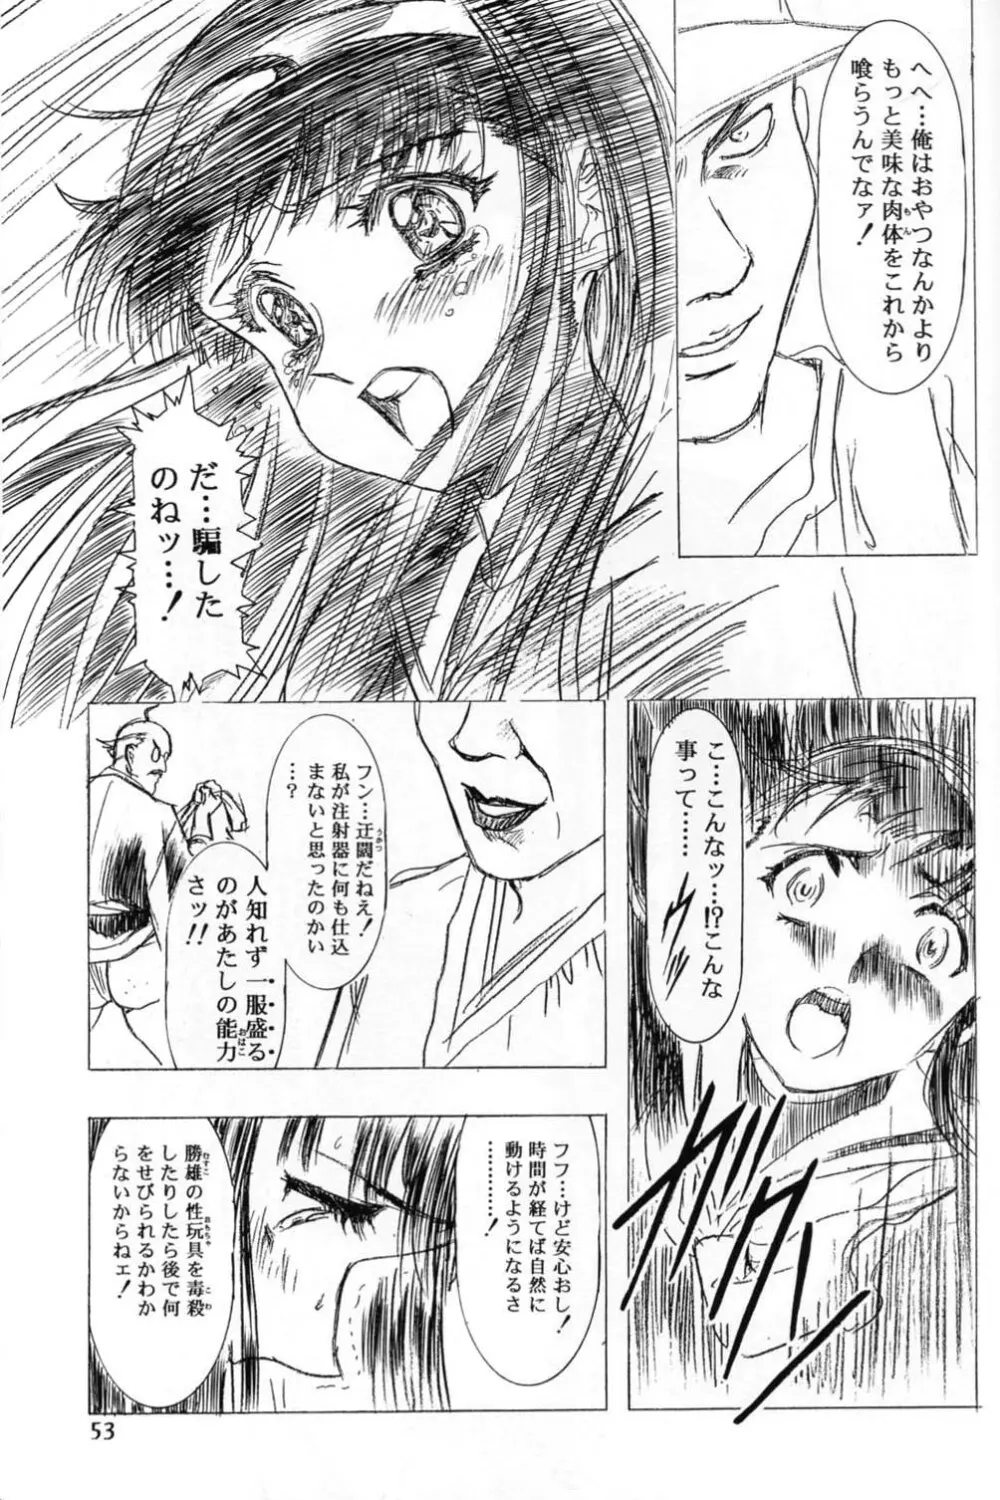 Sakura Ame 2.5 - page52